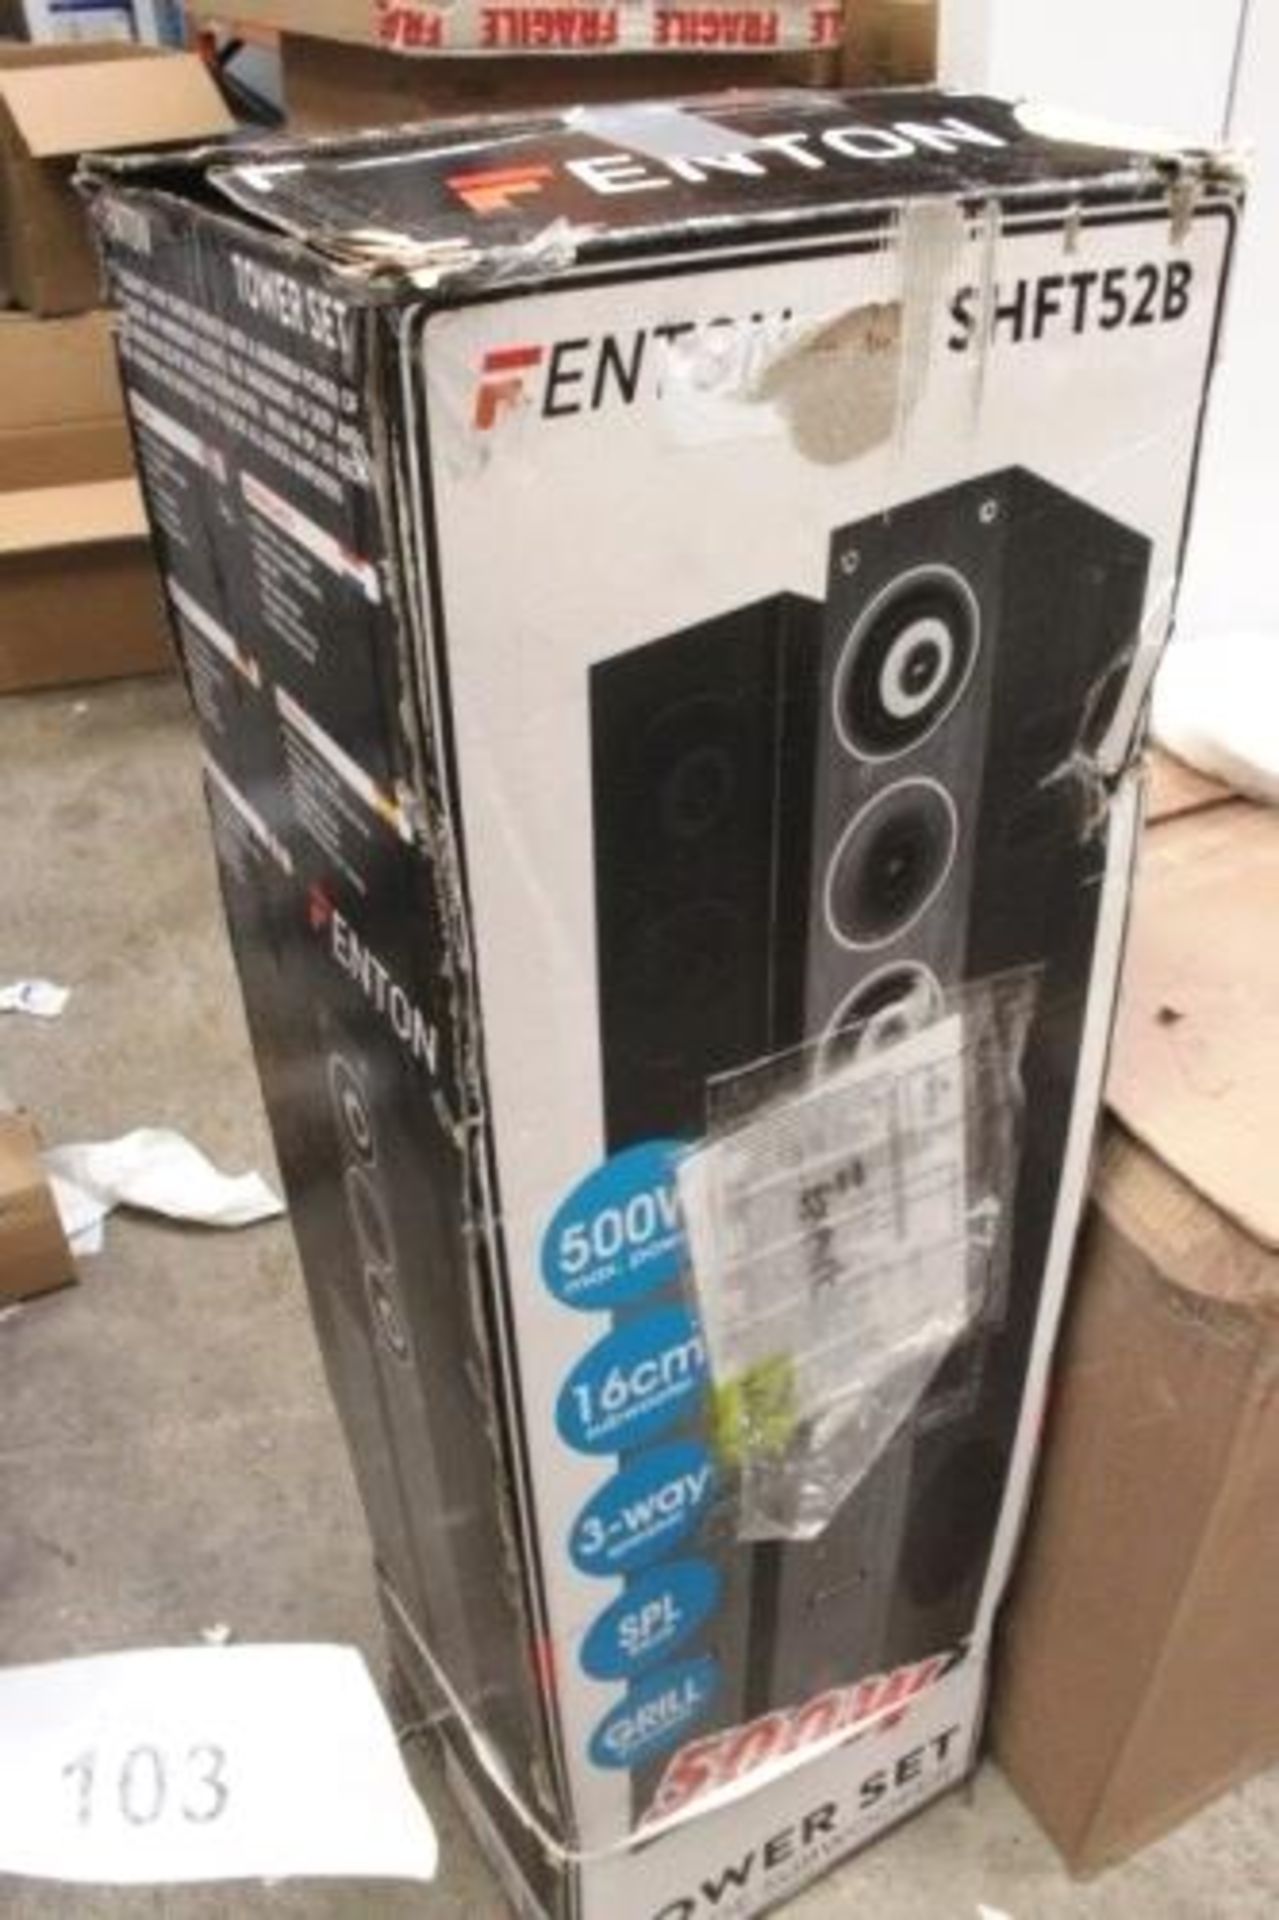 Fenton black tower speaker set, 500W max, model SHFT52B - New in box (ES8) - Image 4 of 4